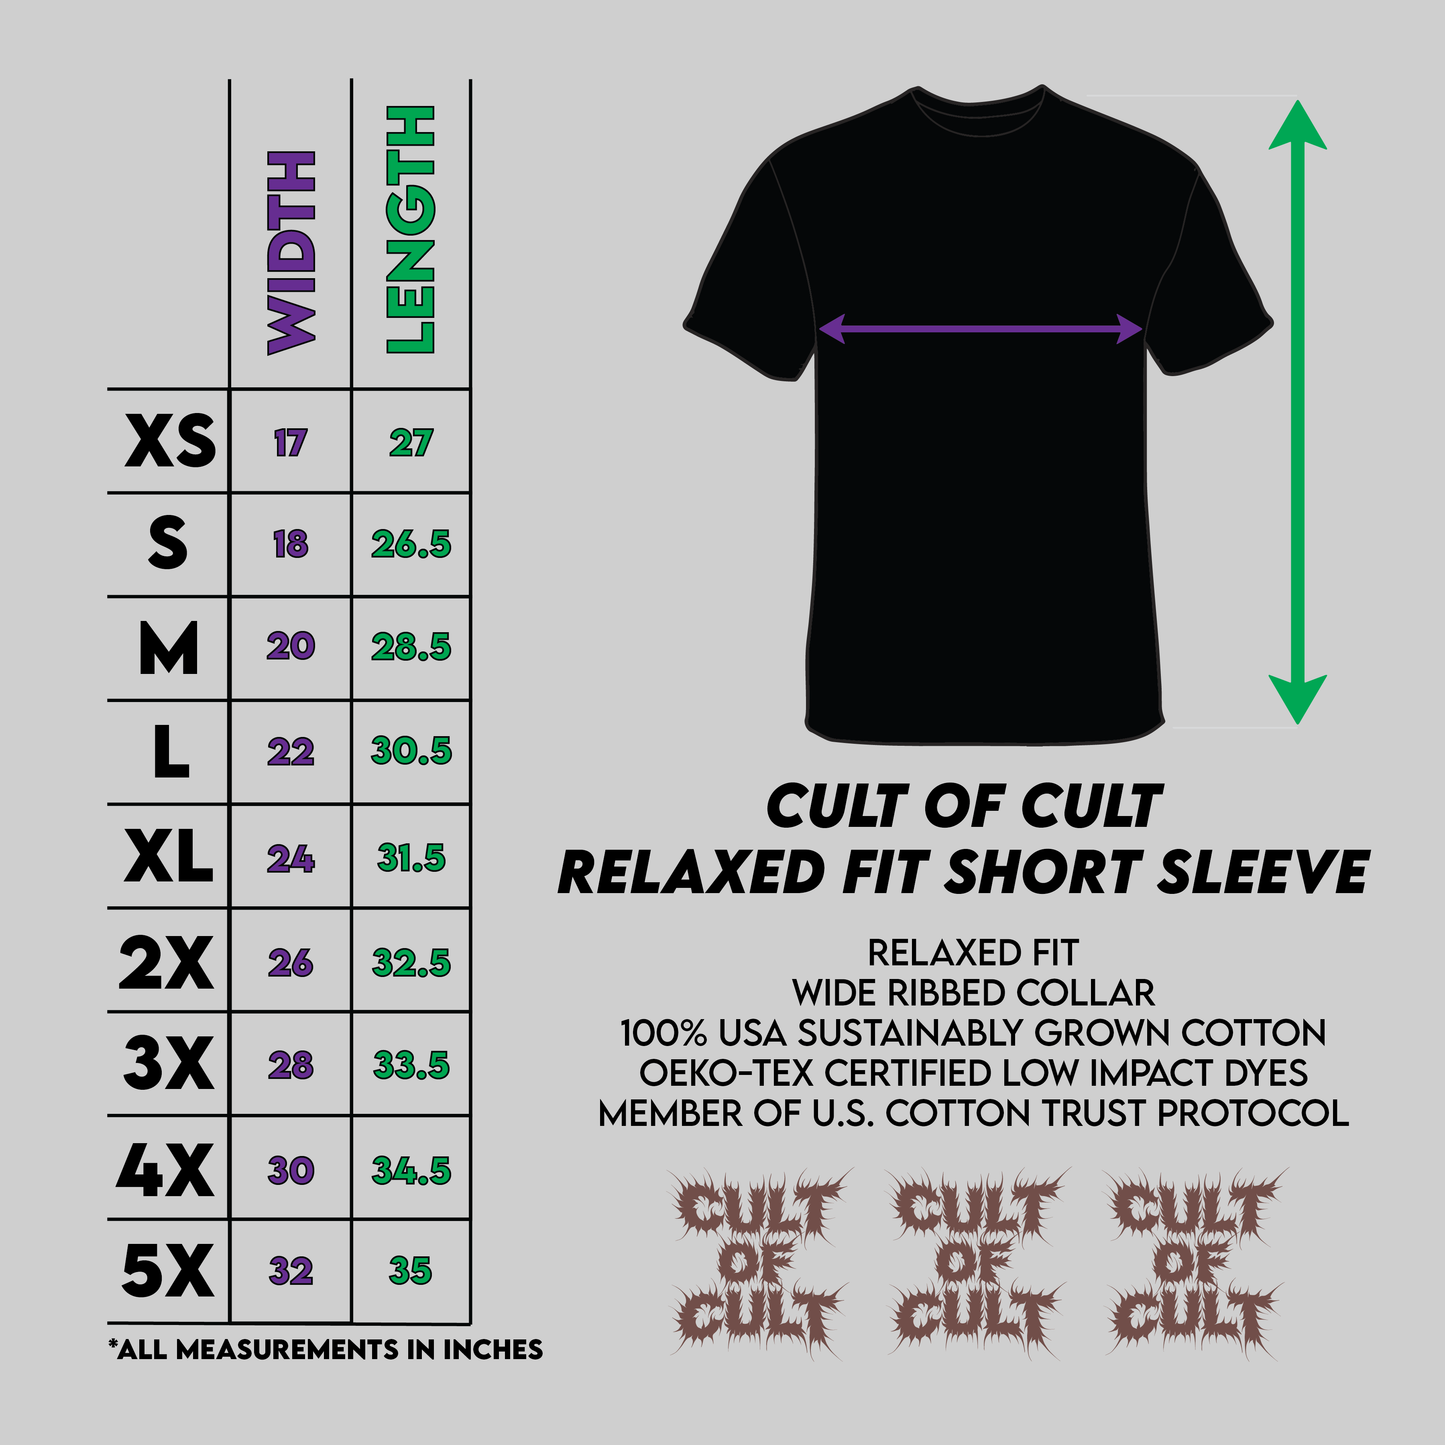 Cult of Cult short sleeve shirt sizing chart